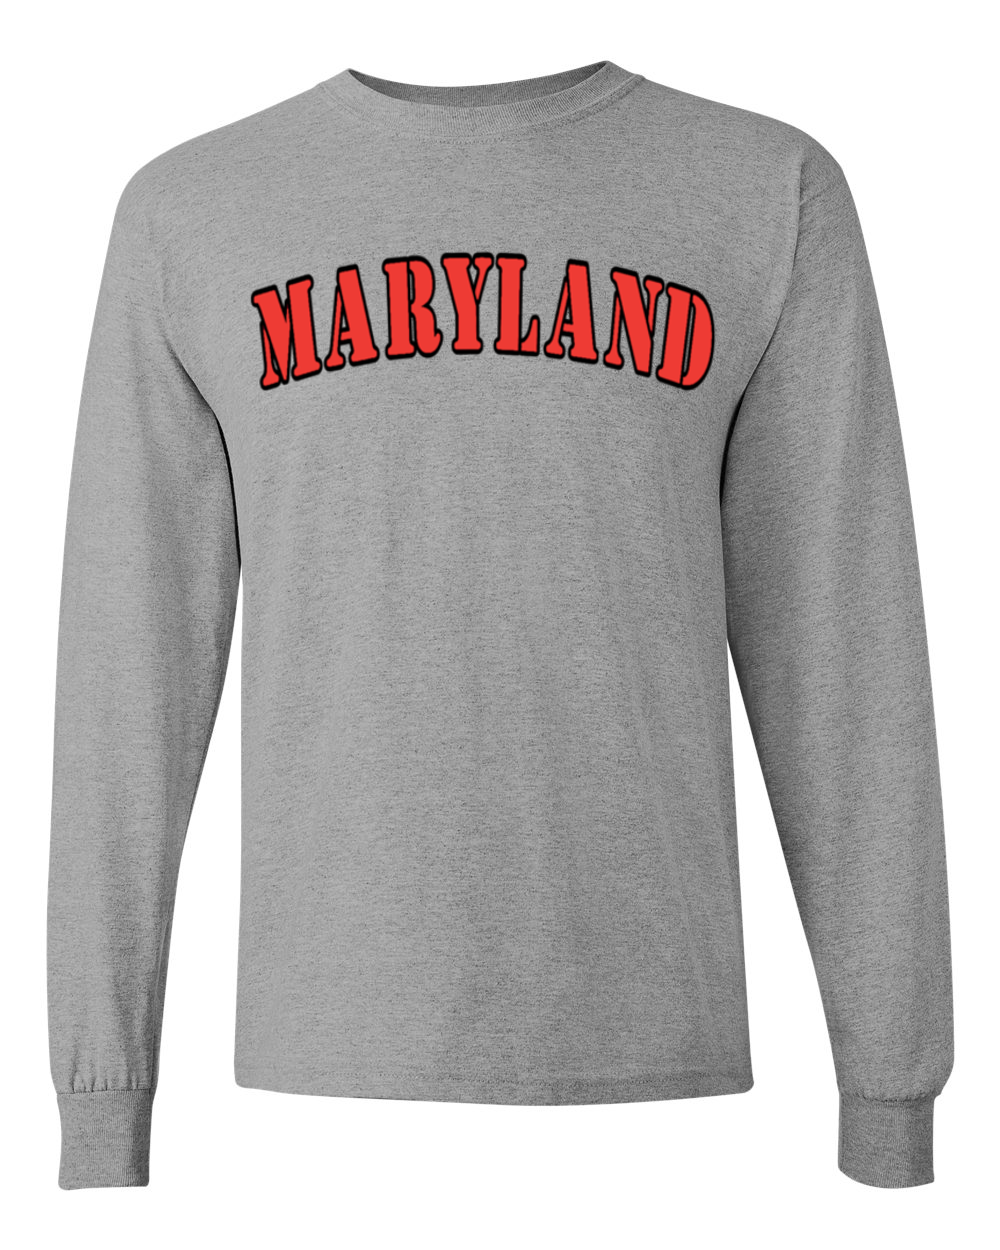 Maryland Plain Text Long Sleeve Shirt (Grey)